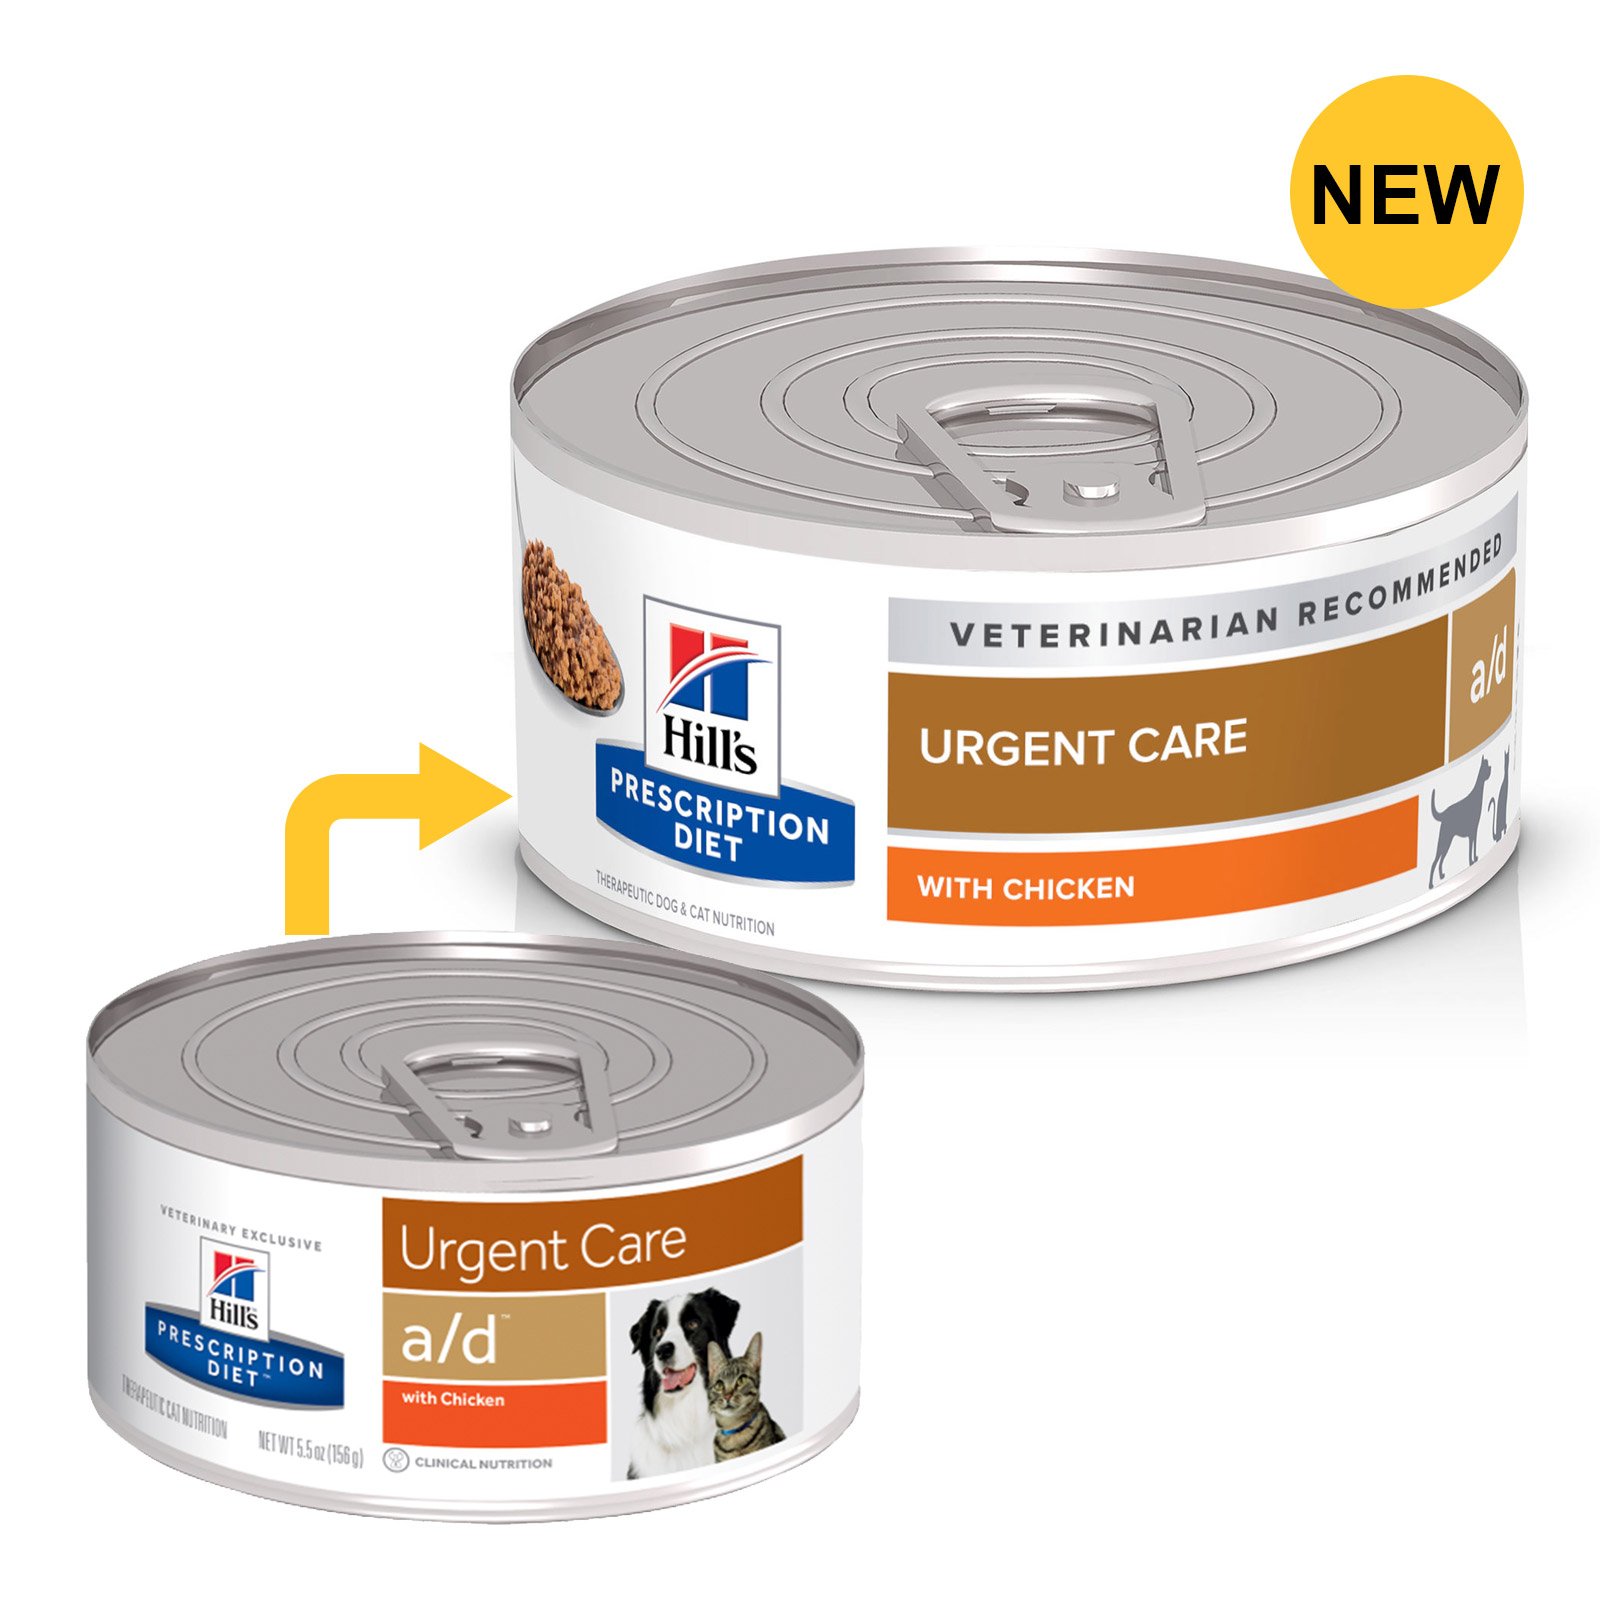 Hill's Prescription Diet a/d Urgent Care Feline Canned Dog Food